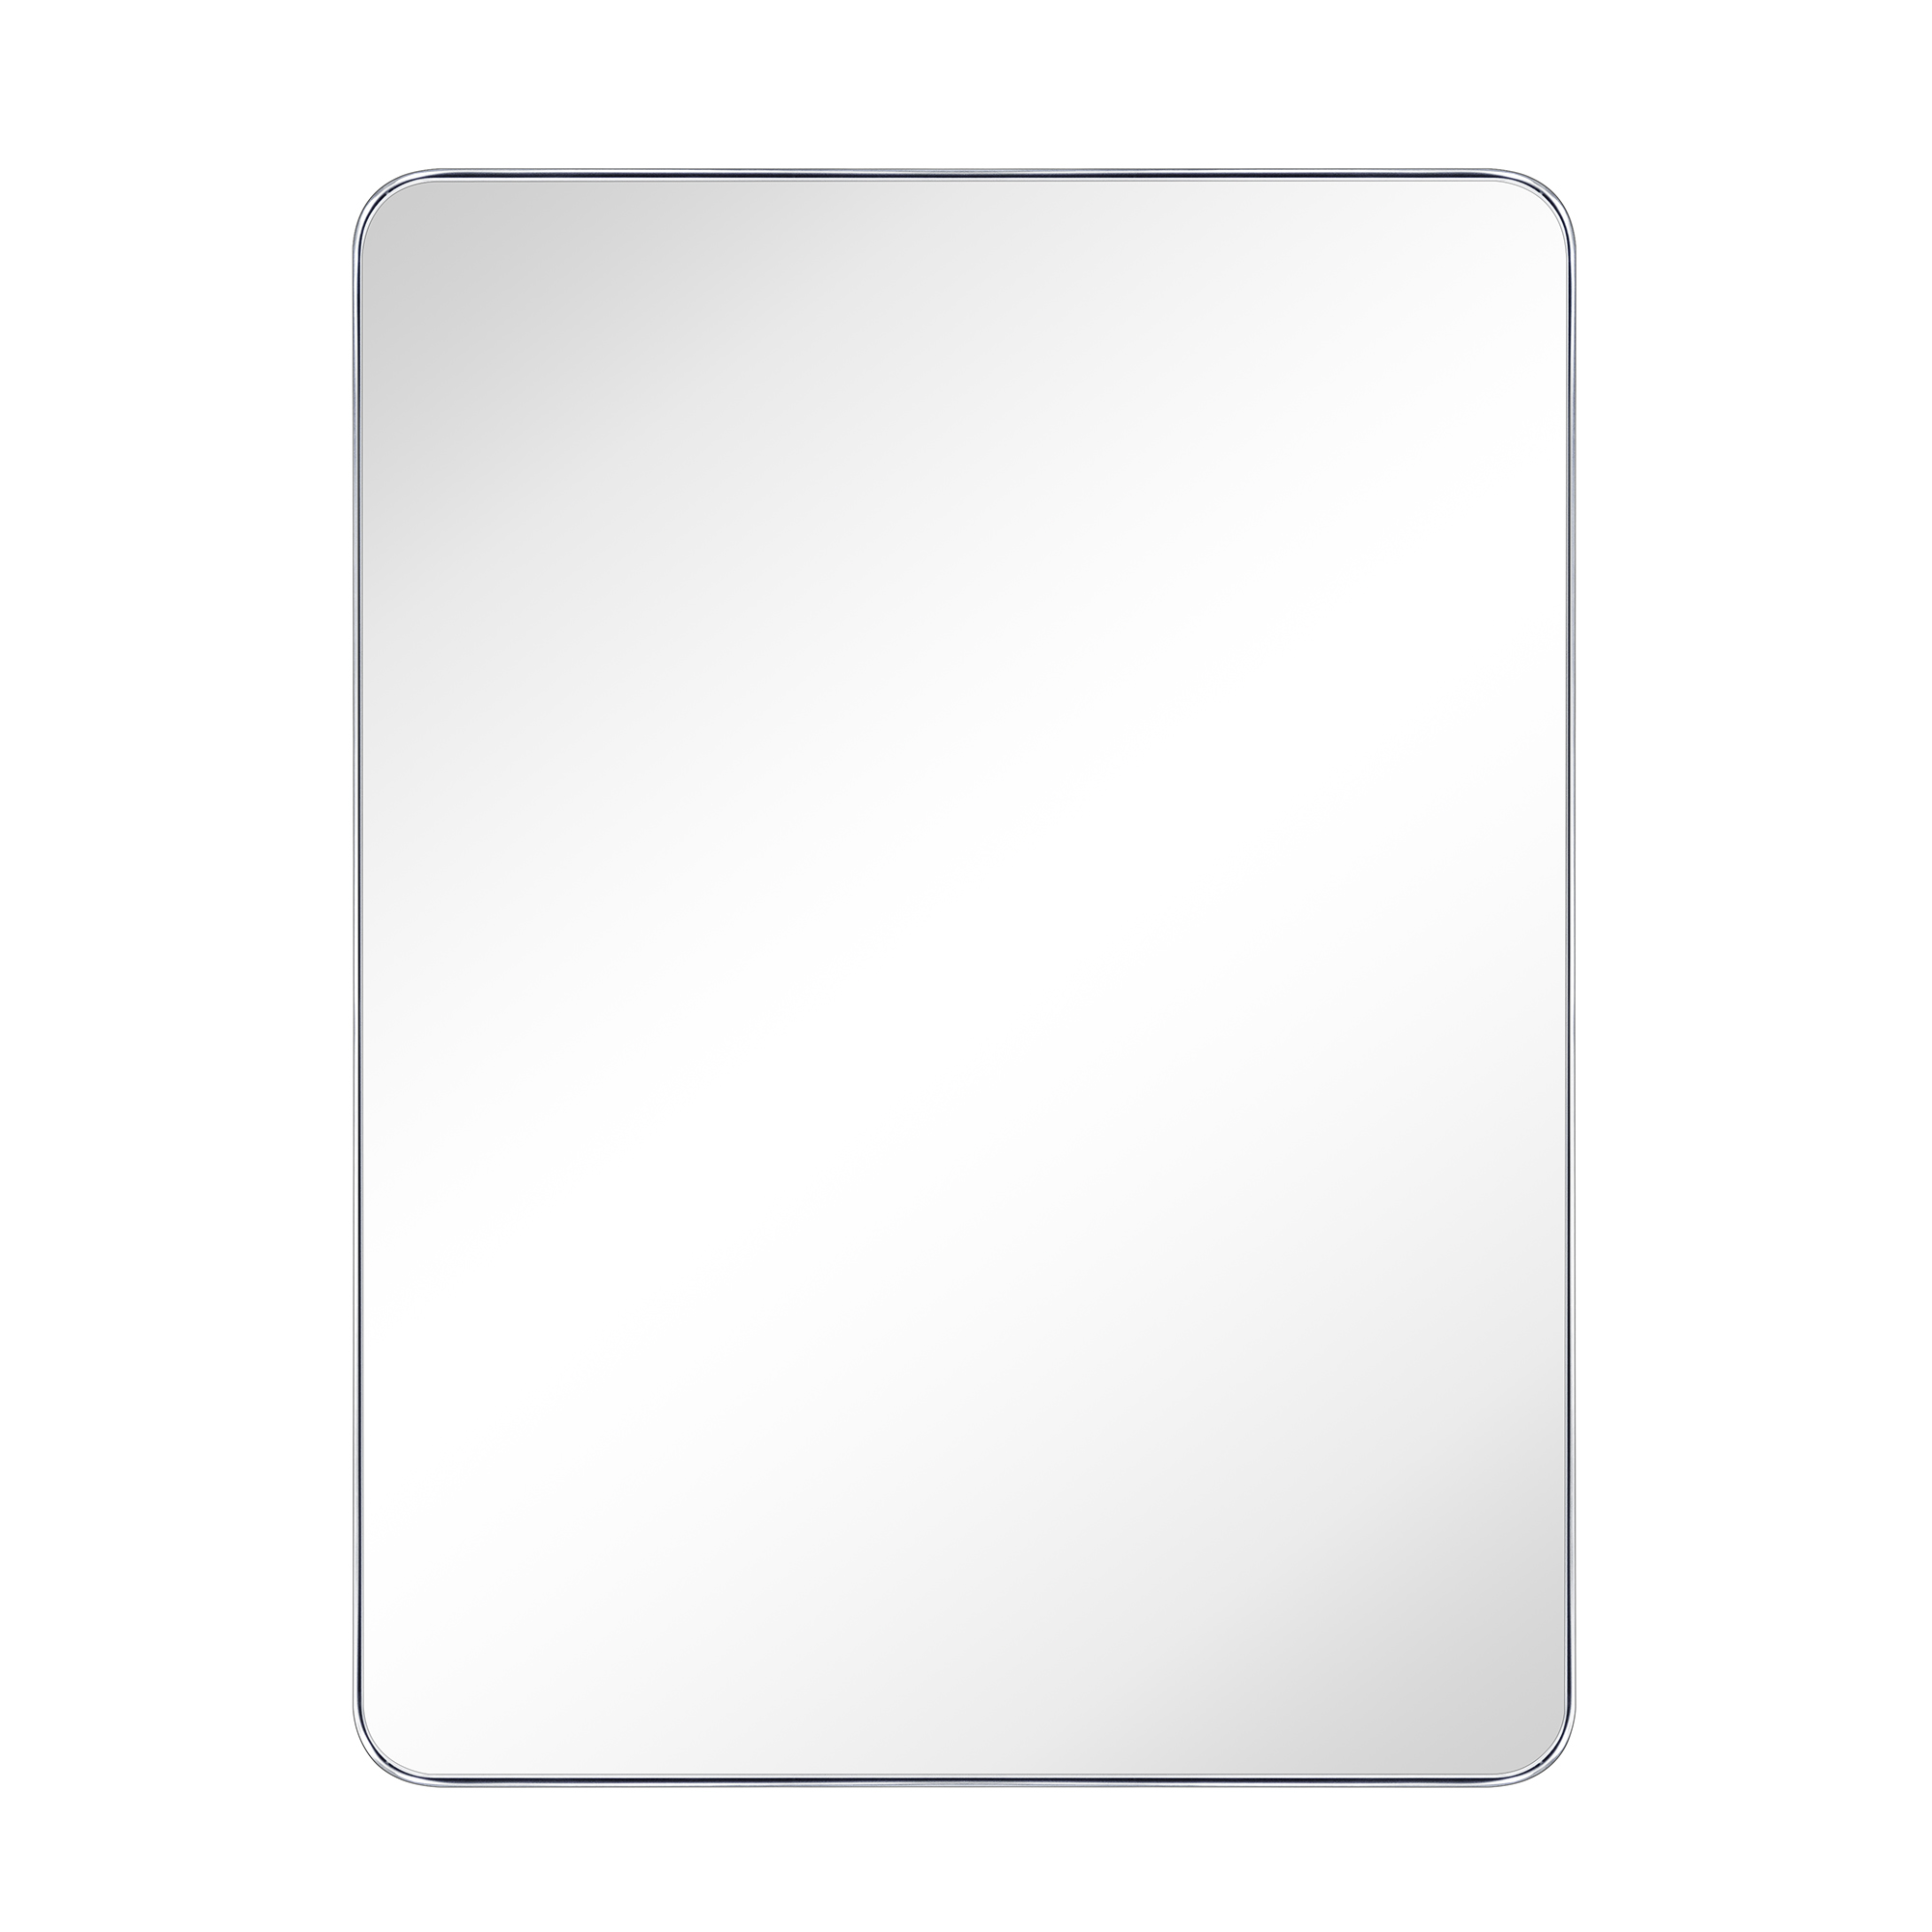 Kengston Modern & Contemporary Rectangular Bathroom Vanity Mirrors-30x40-Chrome